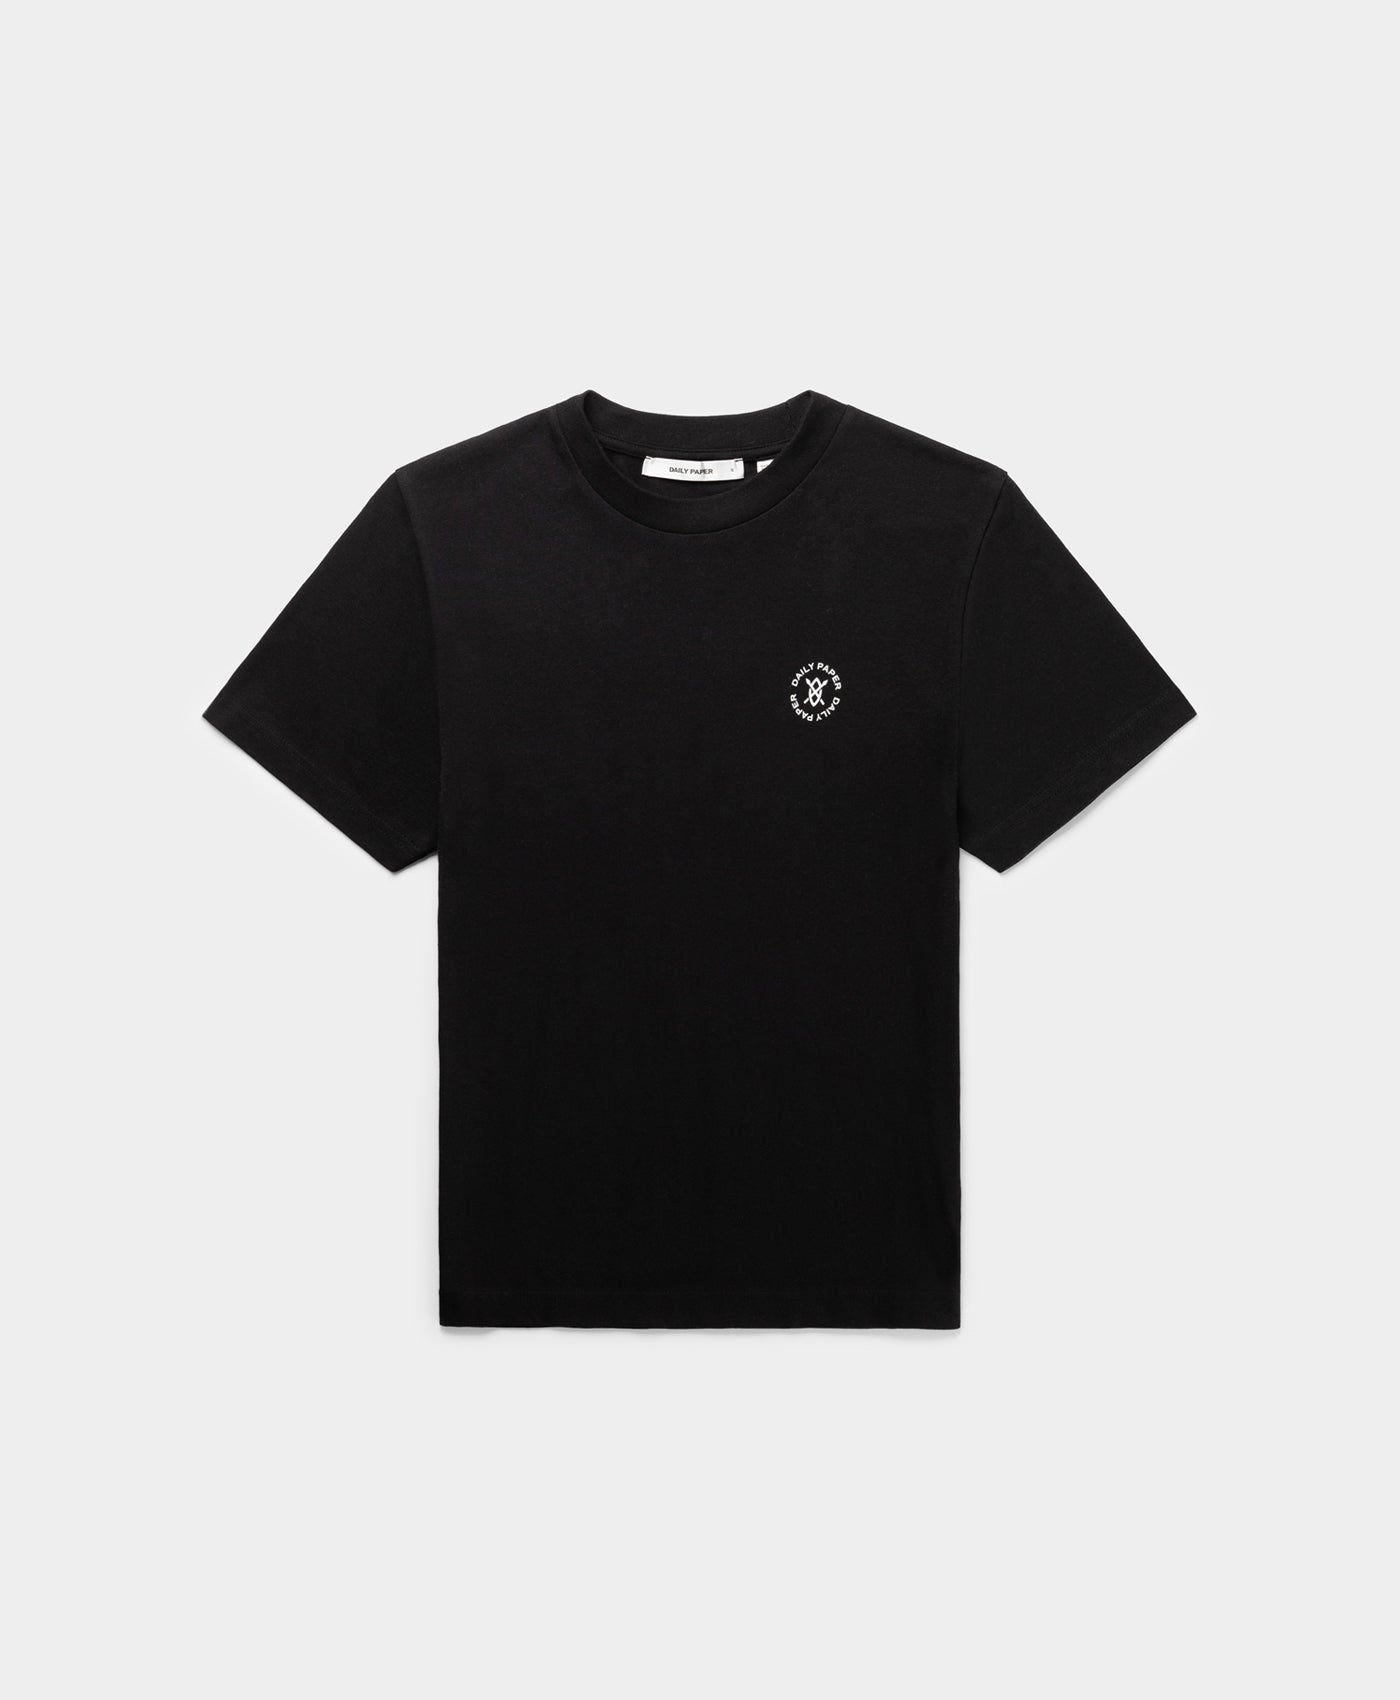 DP - Black Esy Circle T-Shirt - Packshot - Front